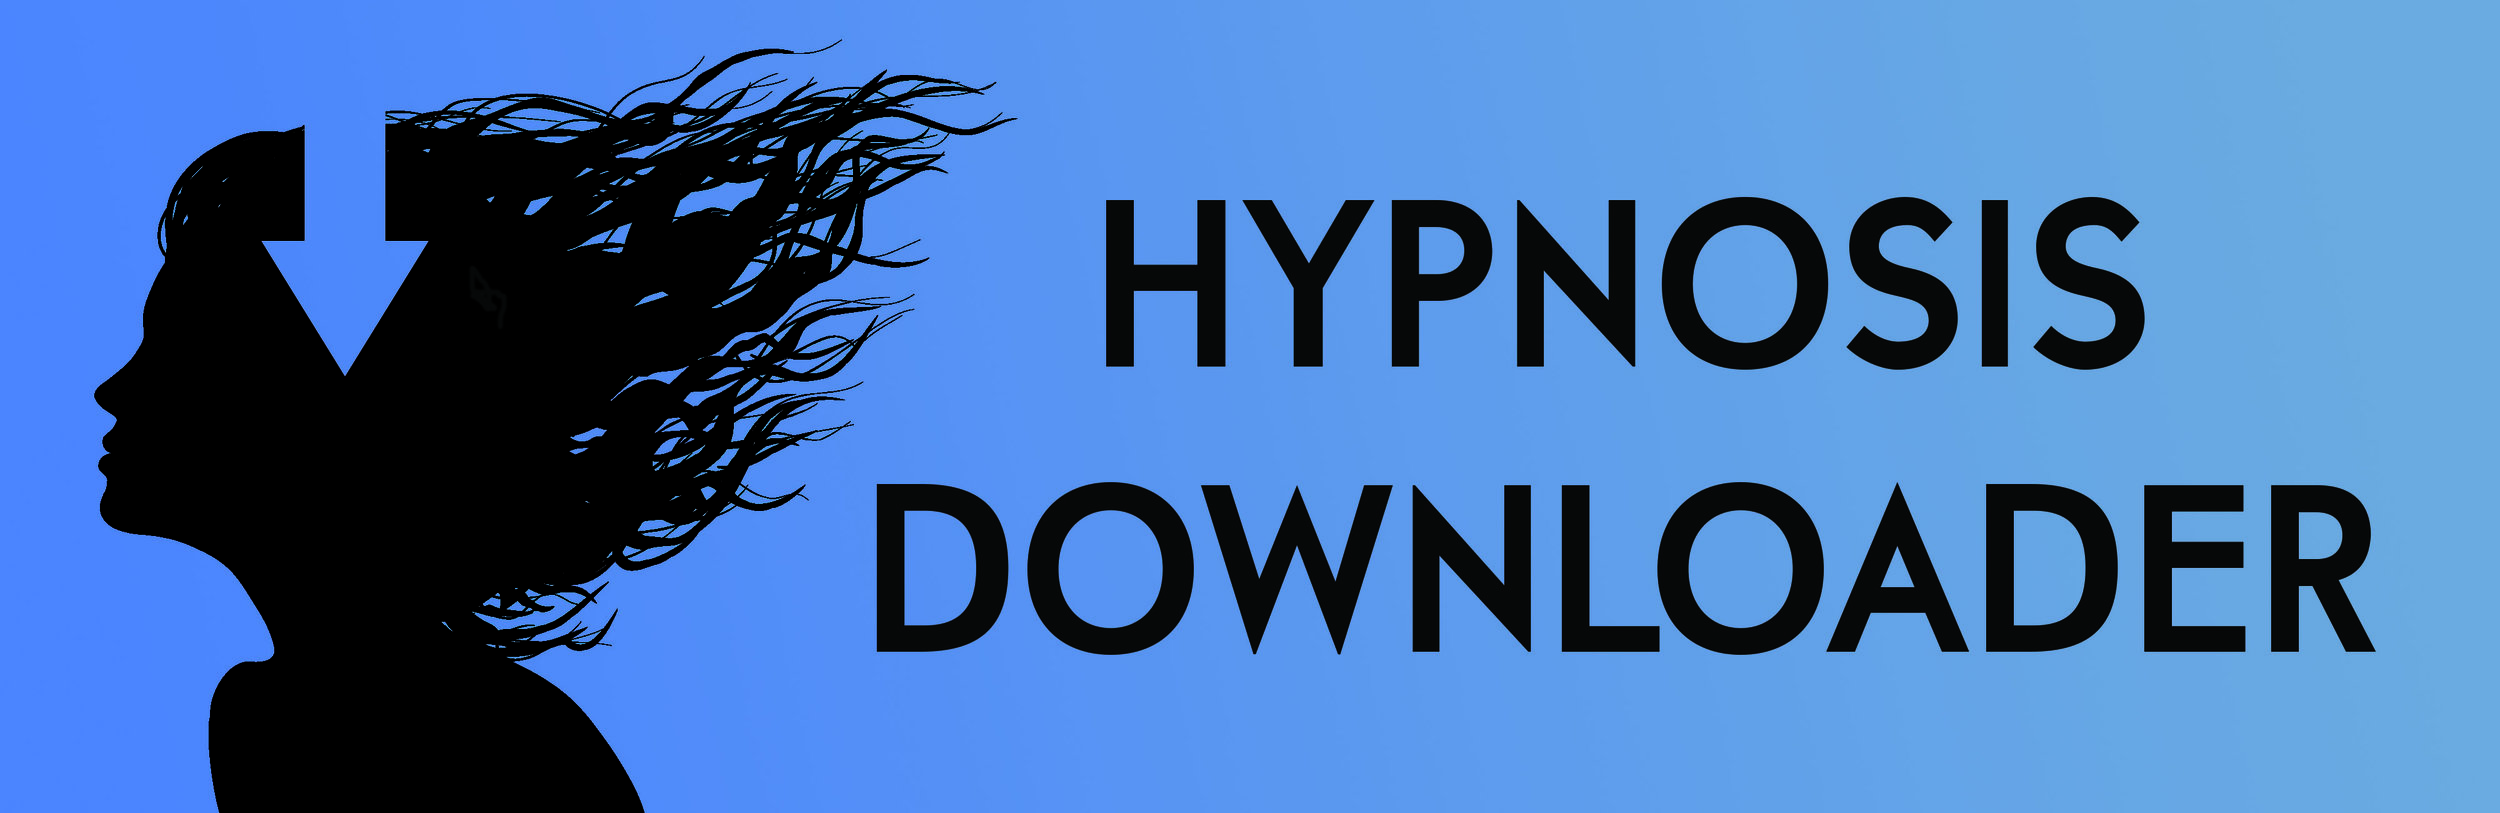 Hypnosis Downloader